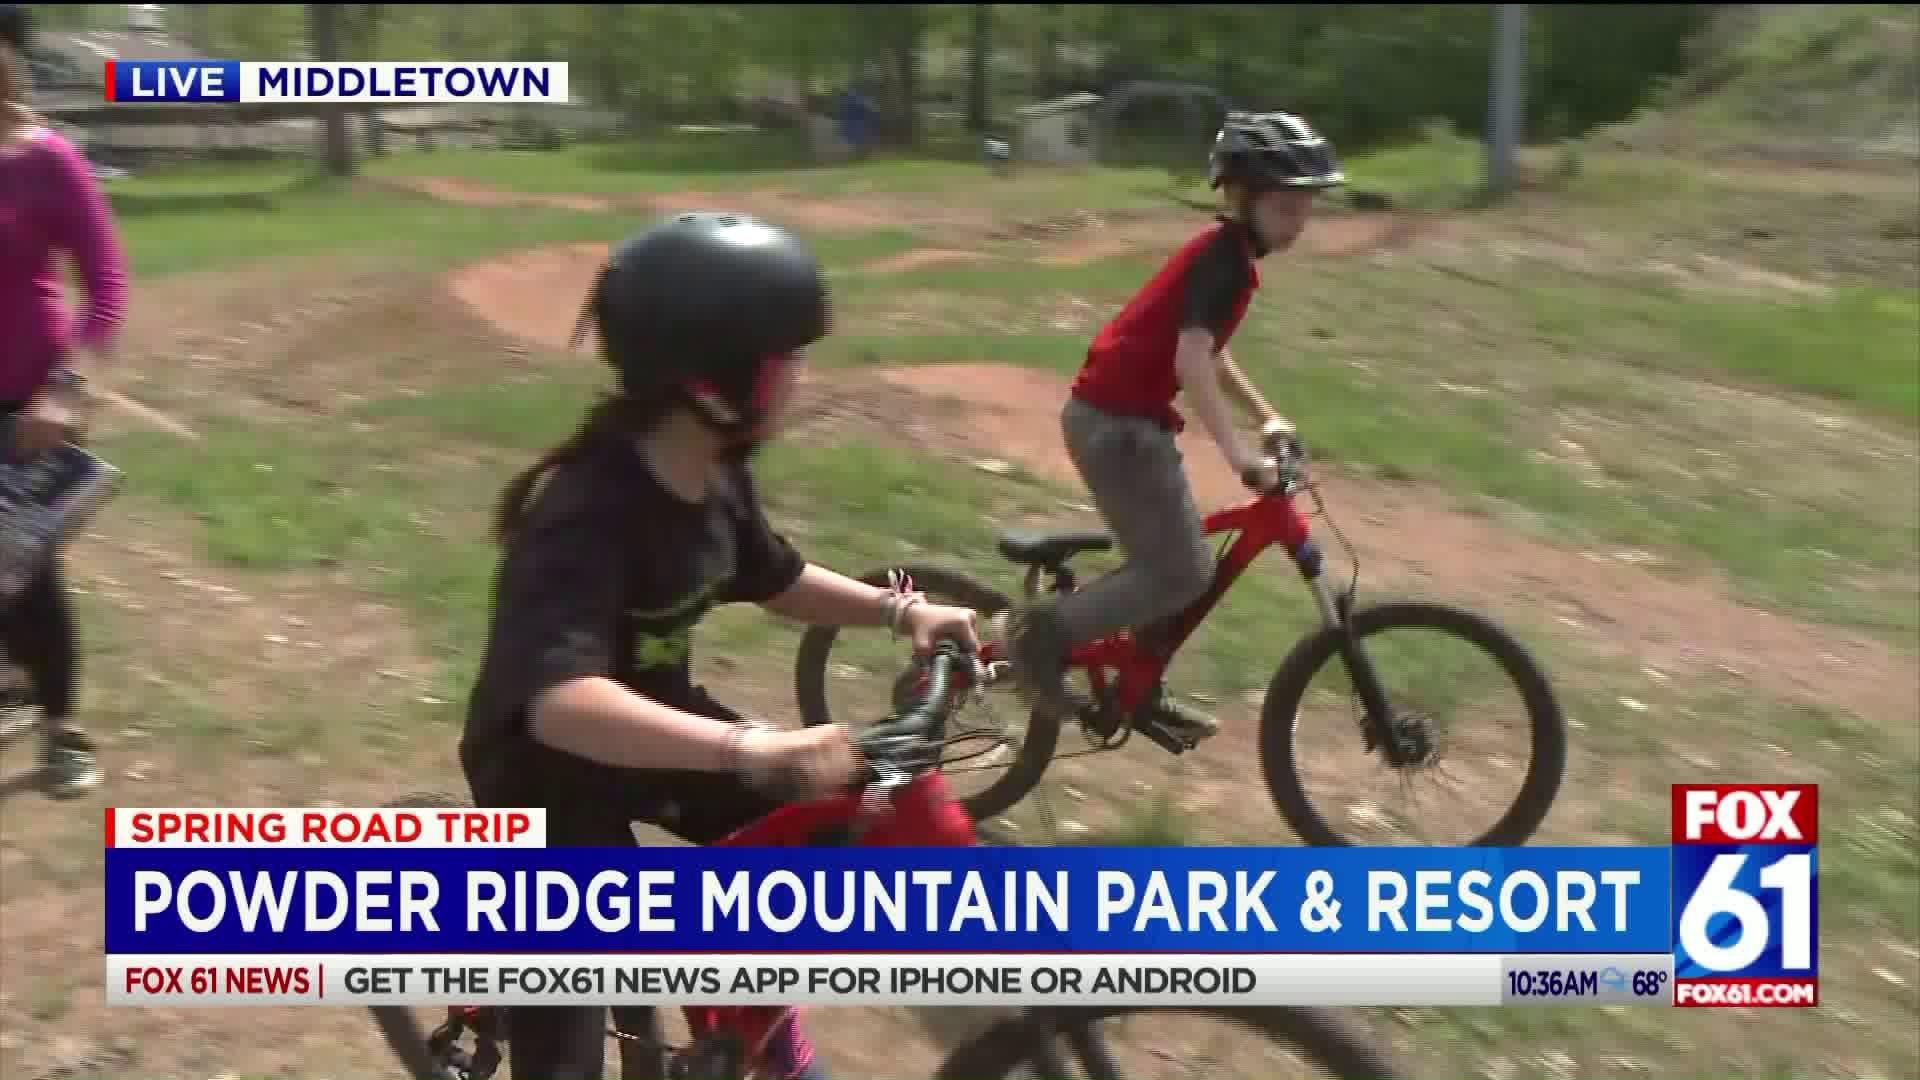 Powder Ridge Mountain Park and Resort